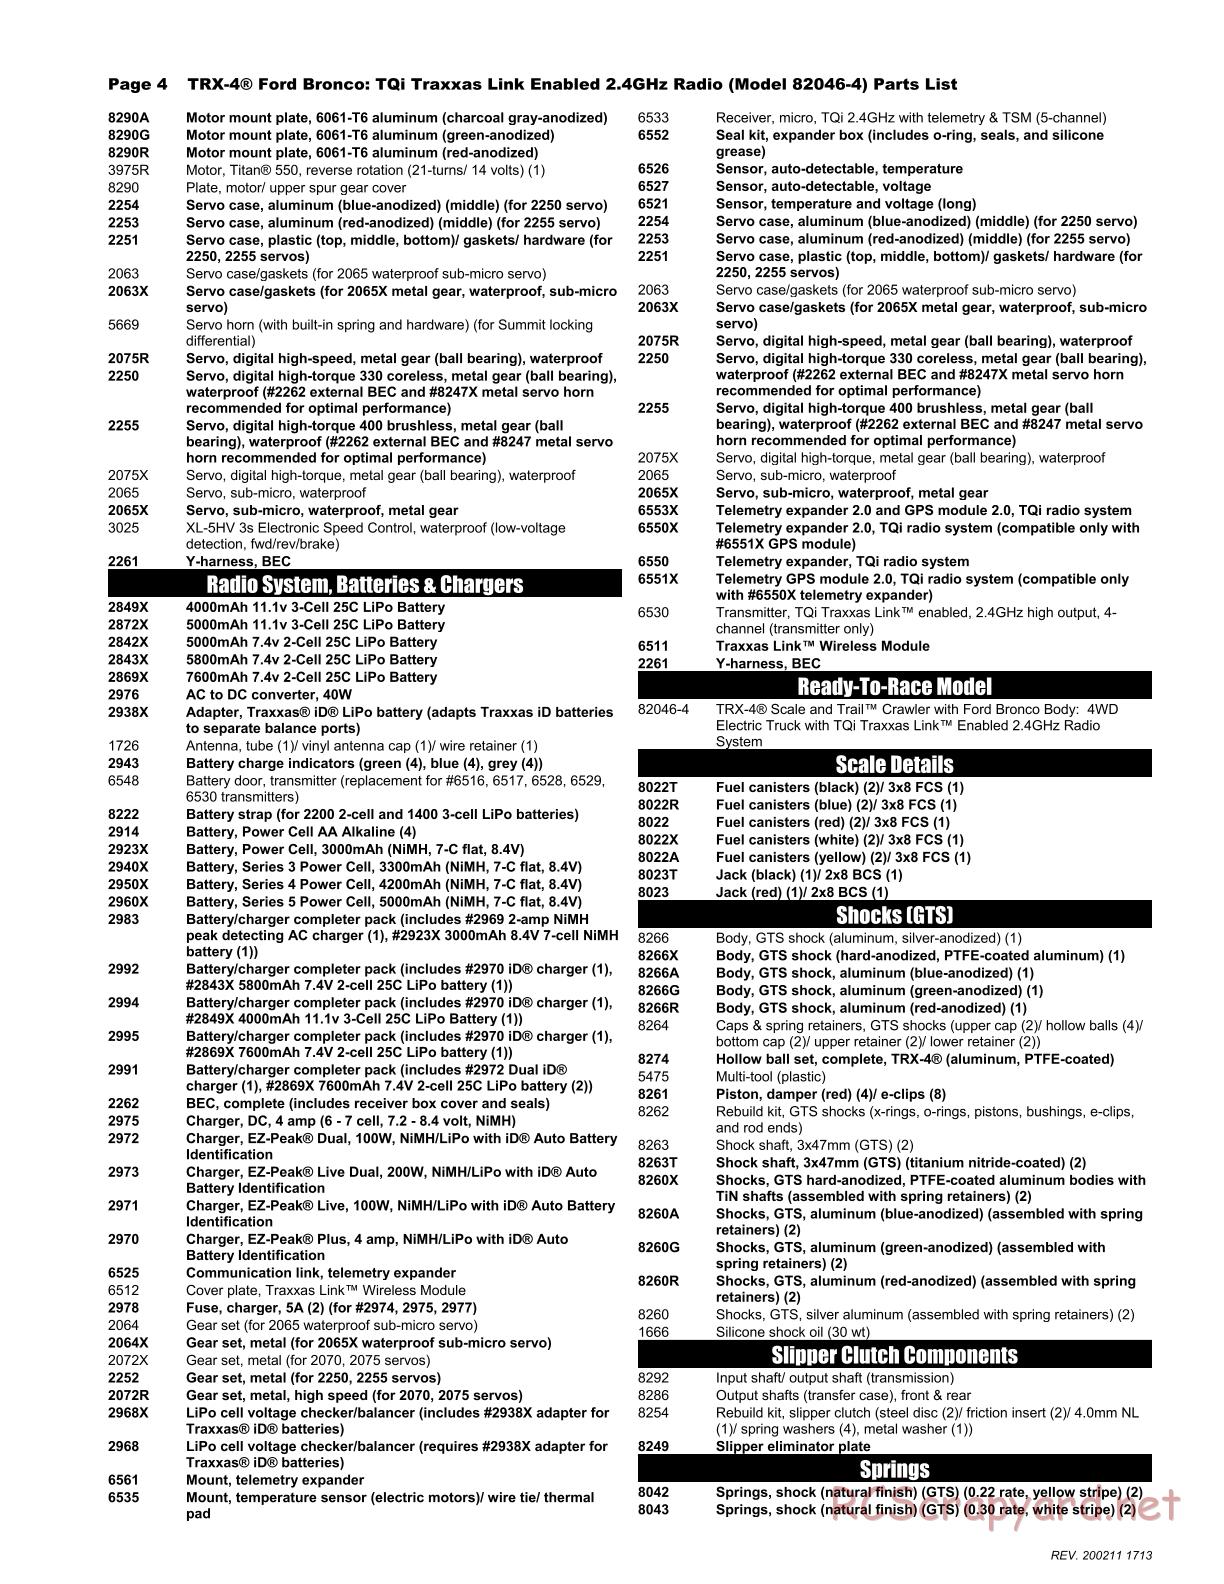 Traxxas - TRX-4 Ford Bronco - Parts List - Page 4